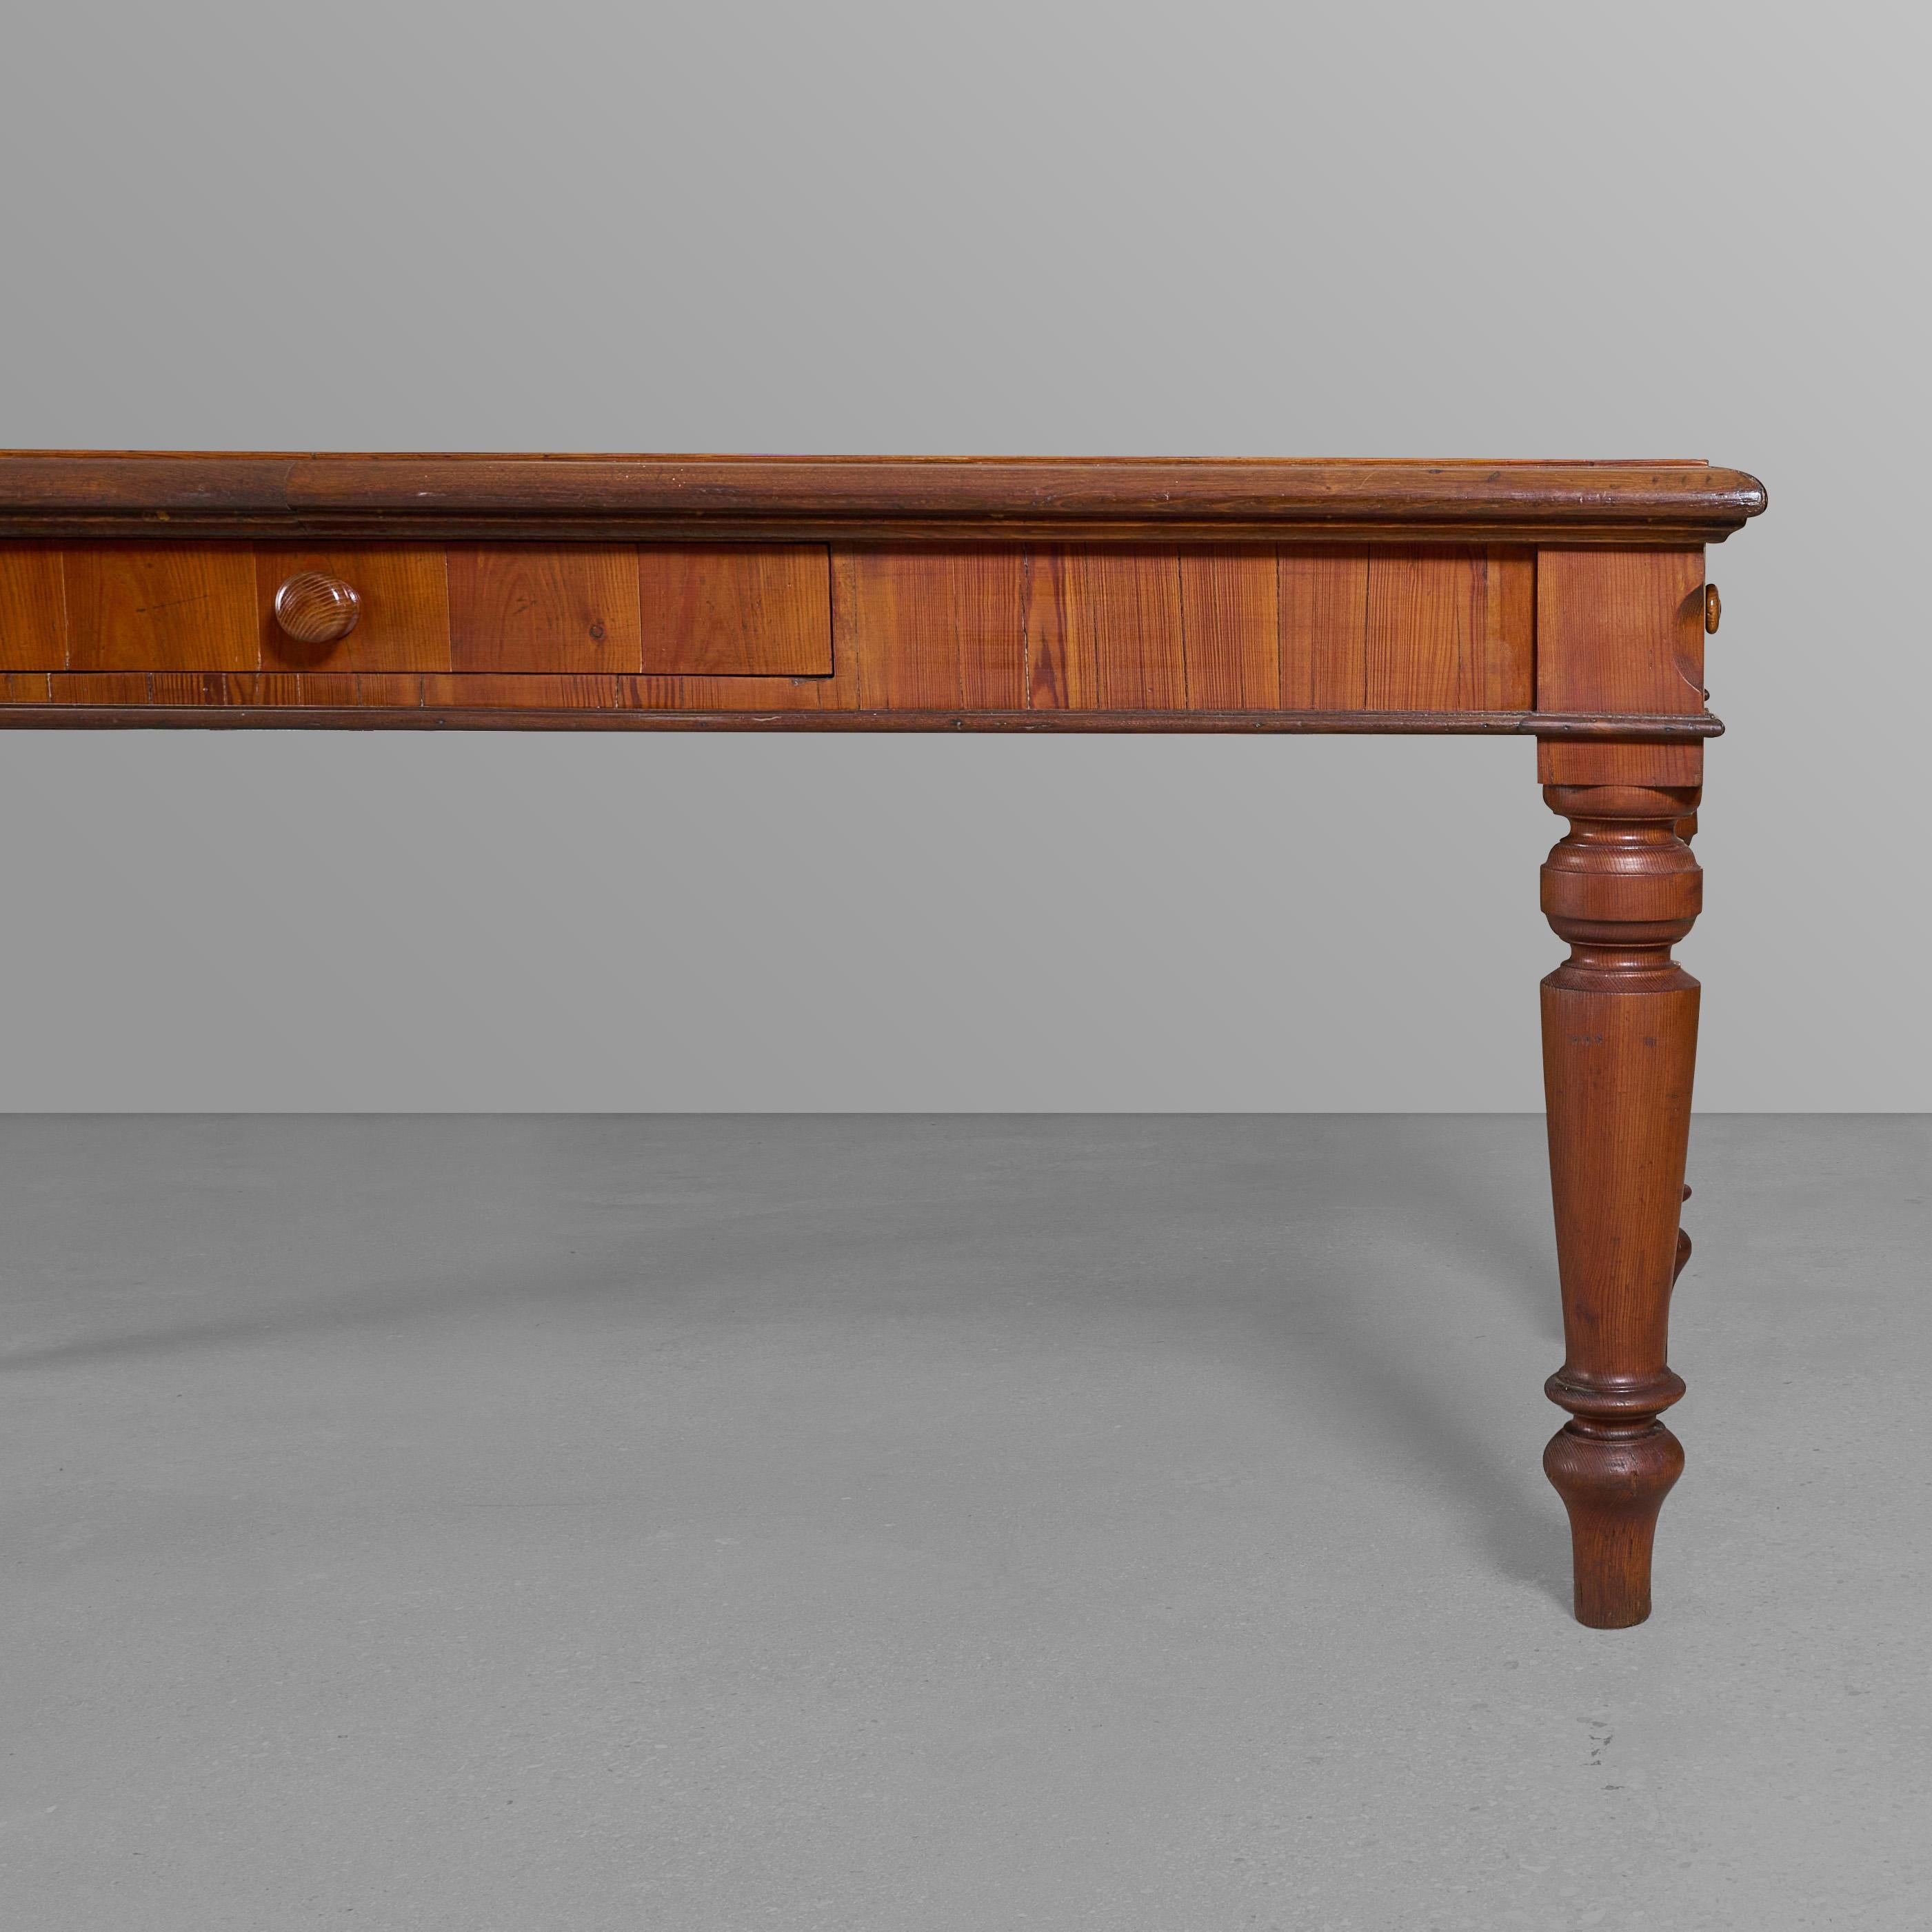 Table/desk with an inlaid wood herringbone design.

 